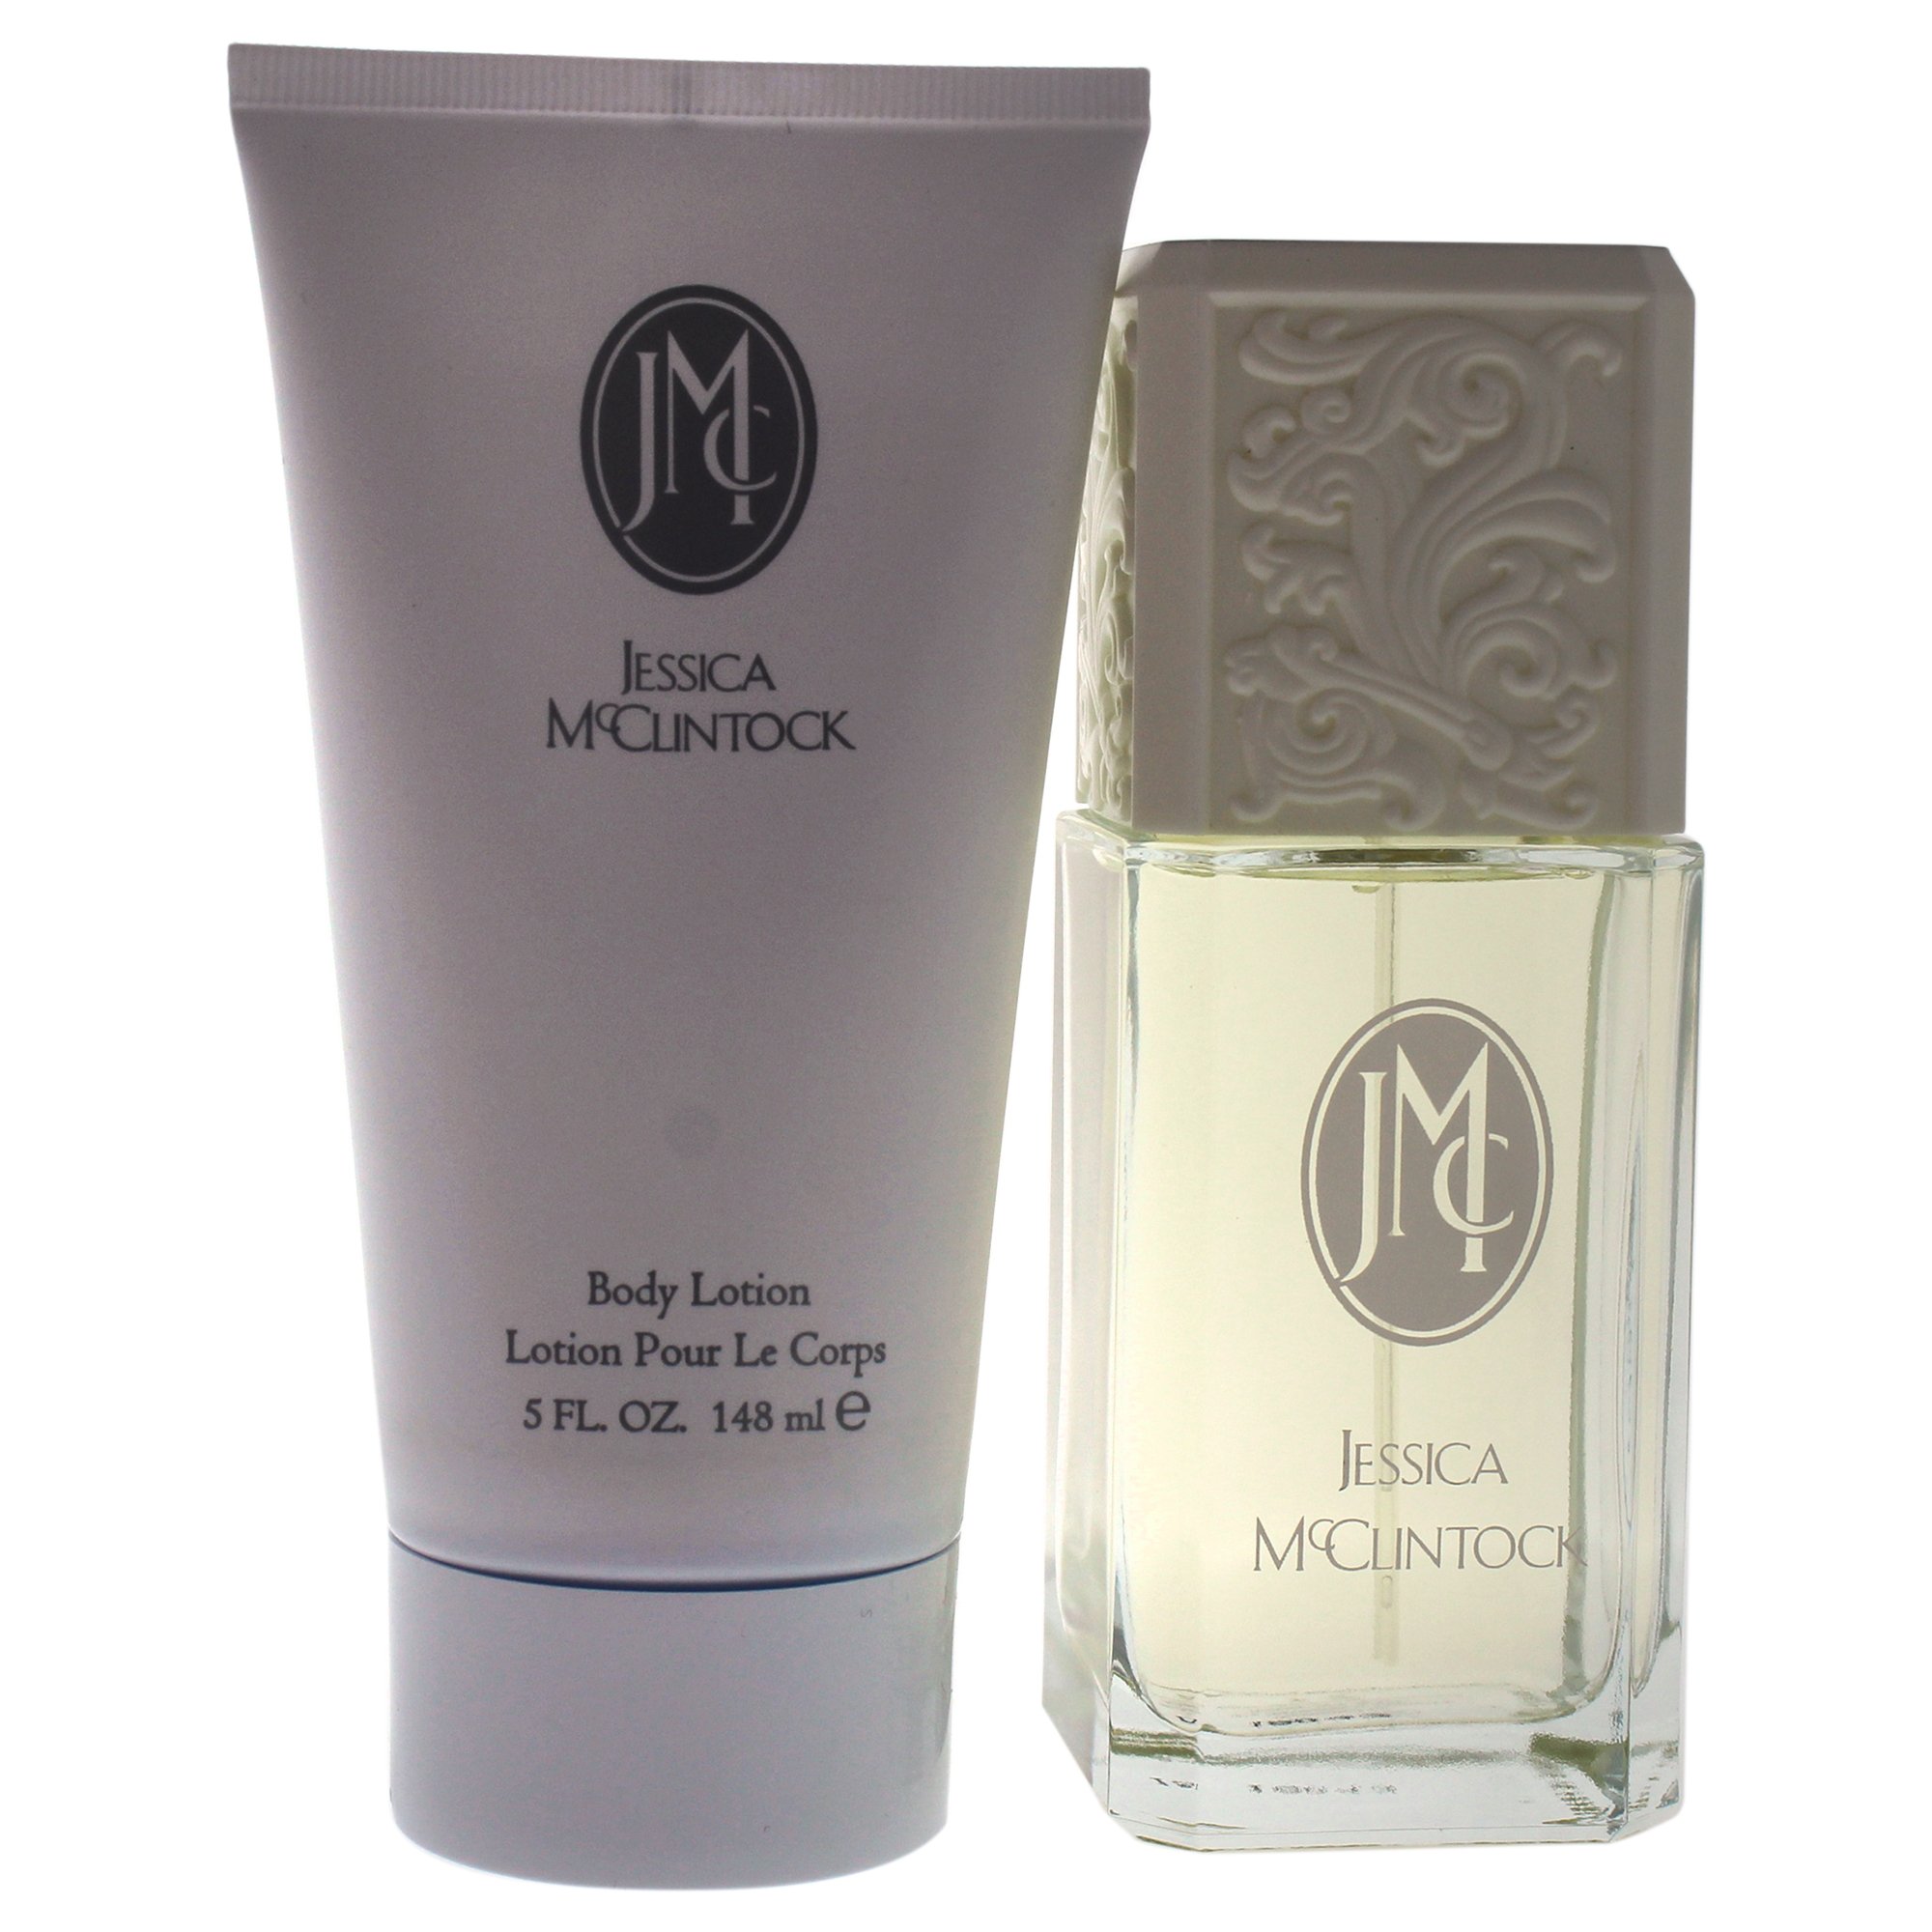 Jessica Mcclintock By Jessica Mcclintock For Women. Gift Set (eau De Parfum Spray 3.4 Oz+ Body Lotion 5.0 Oz)